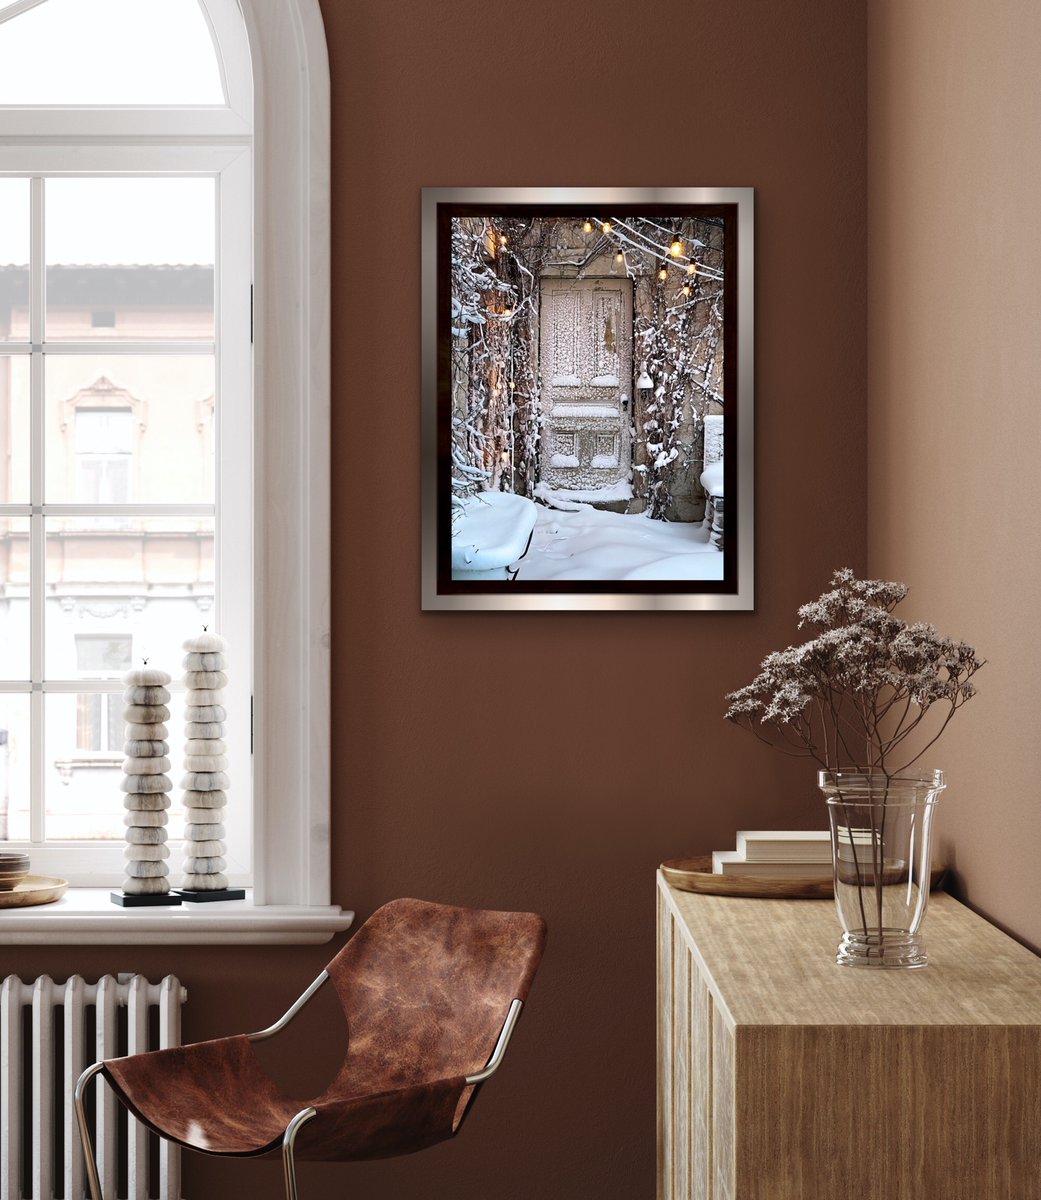 Rustic door covered with frosty snow #shabbylove #winterscene #farmhouseart #buyintoart #snowcovered #homedecoration #wallart #AYearForArt #ArtMatters #rustic #snow #snowfall #frost #winter #winteriscoming #winterishere #interiordesign #art 
See it here - deborah-league.pixels.com/featured/rusti…